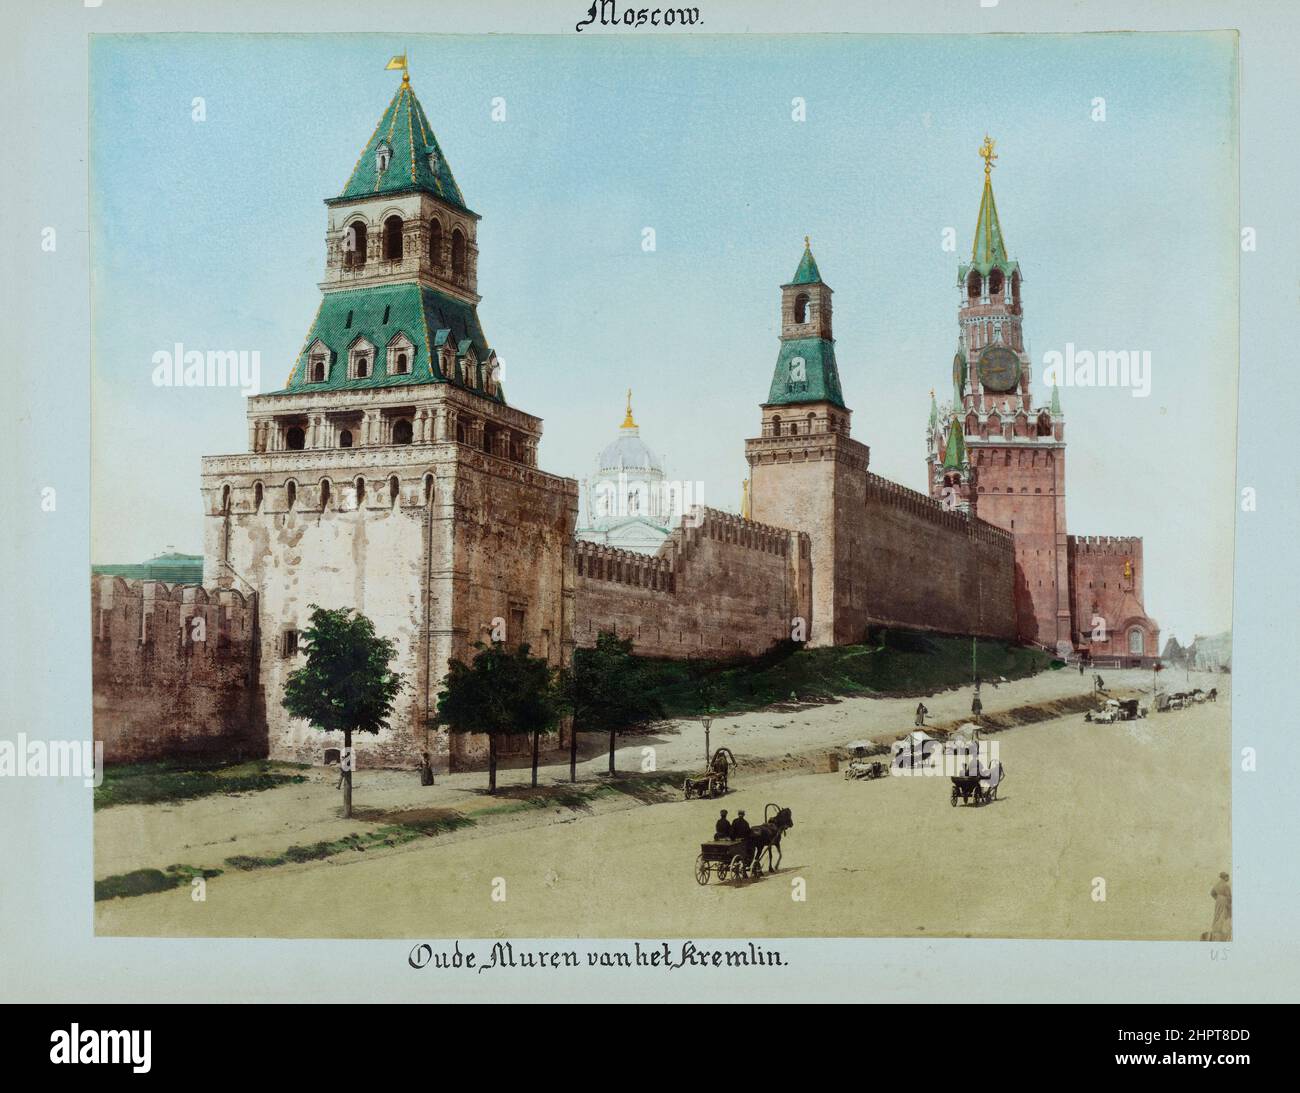 Photo du 19th siècle des tours Konstantino-Eleninskaya (à gauche), Nabatnaya et Spasskaya (à droite) du Kremlin de Moscou. Banque D'Images